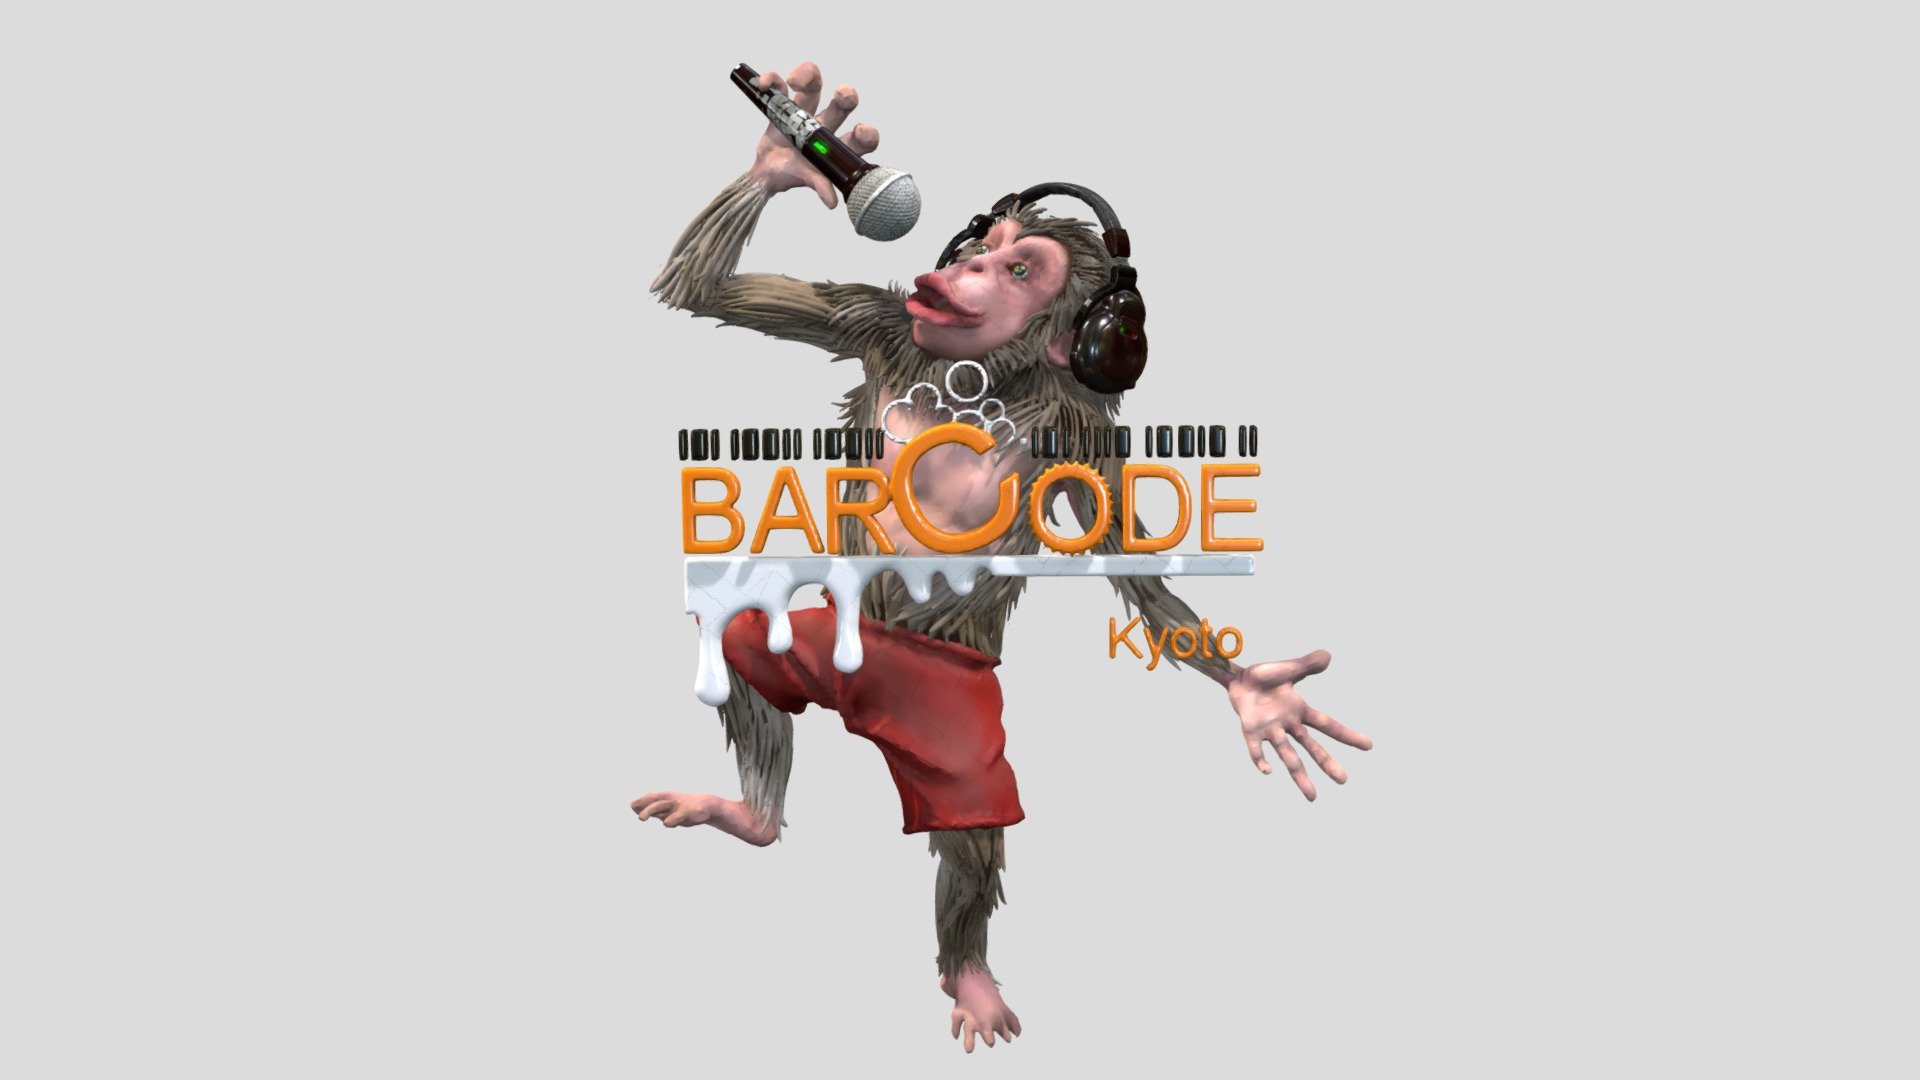 Barcode Concept 2020-02-12 17-17-38